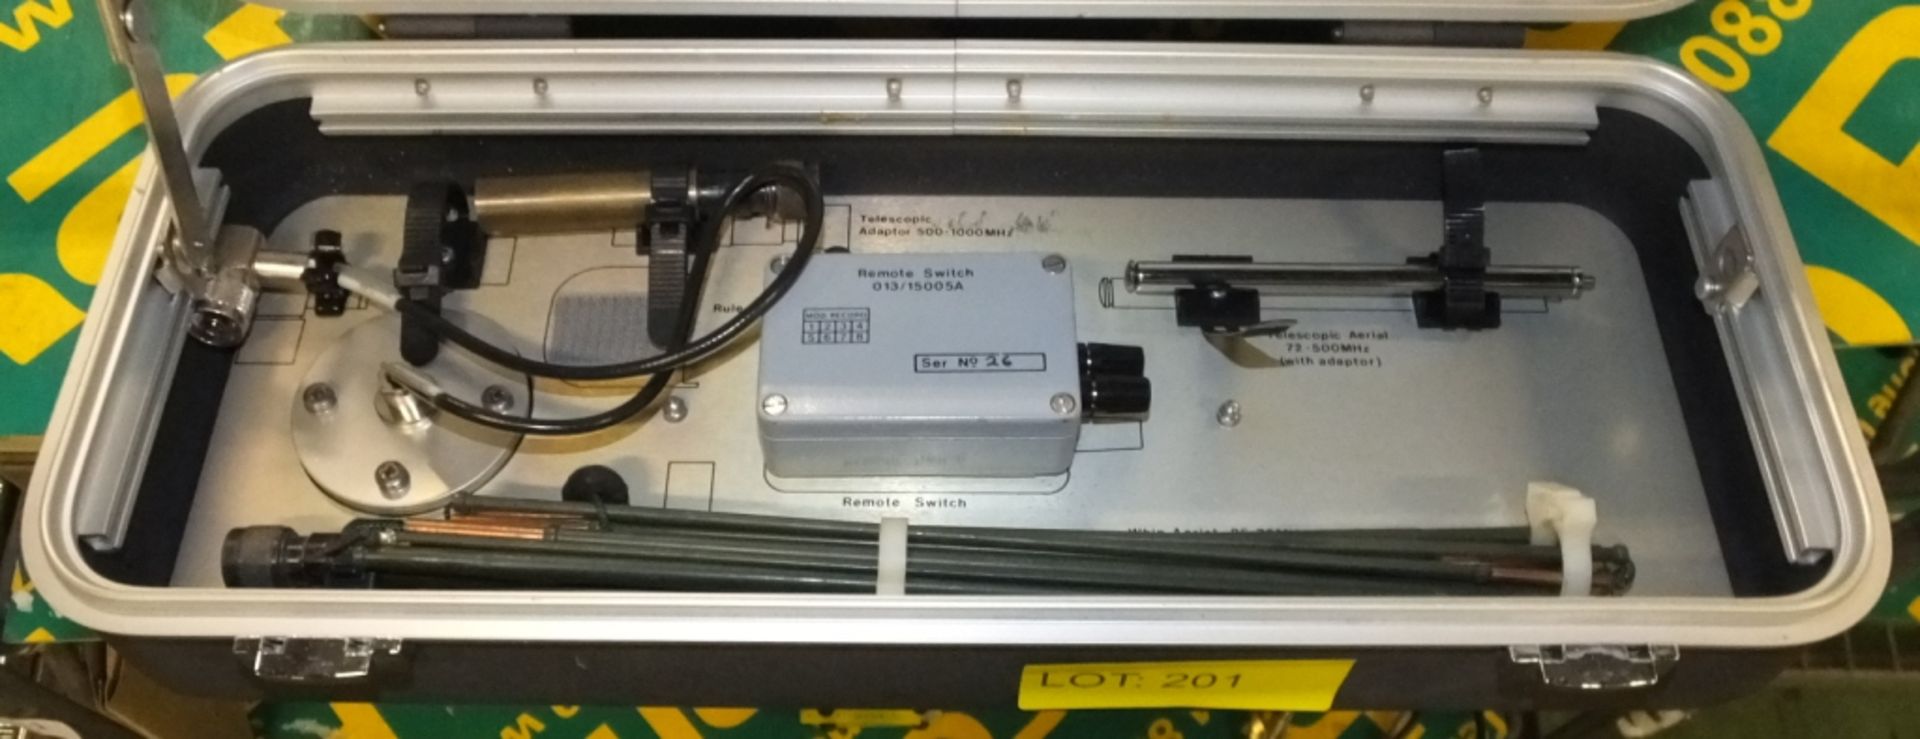 Farnell Signal Generator - 10Hz - 1Ghz - PSG1000 - Image 4 of 4